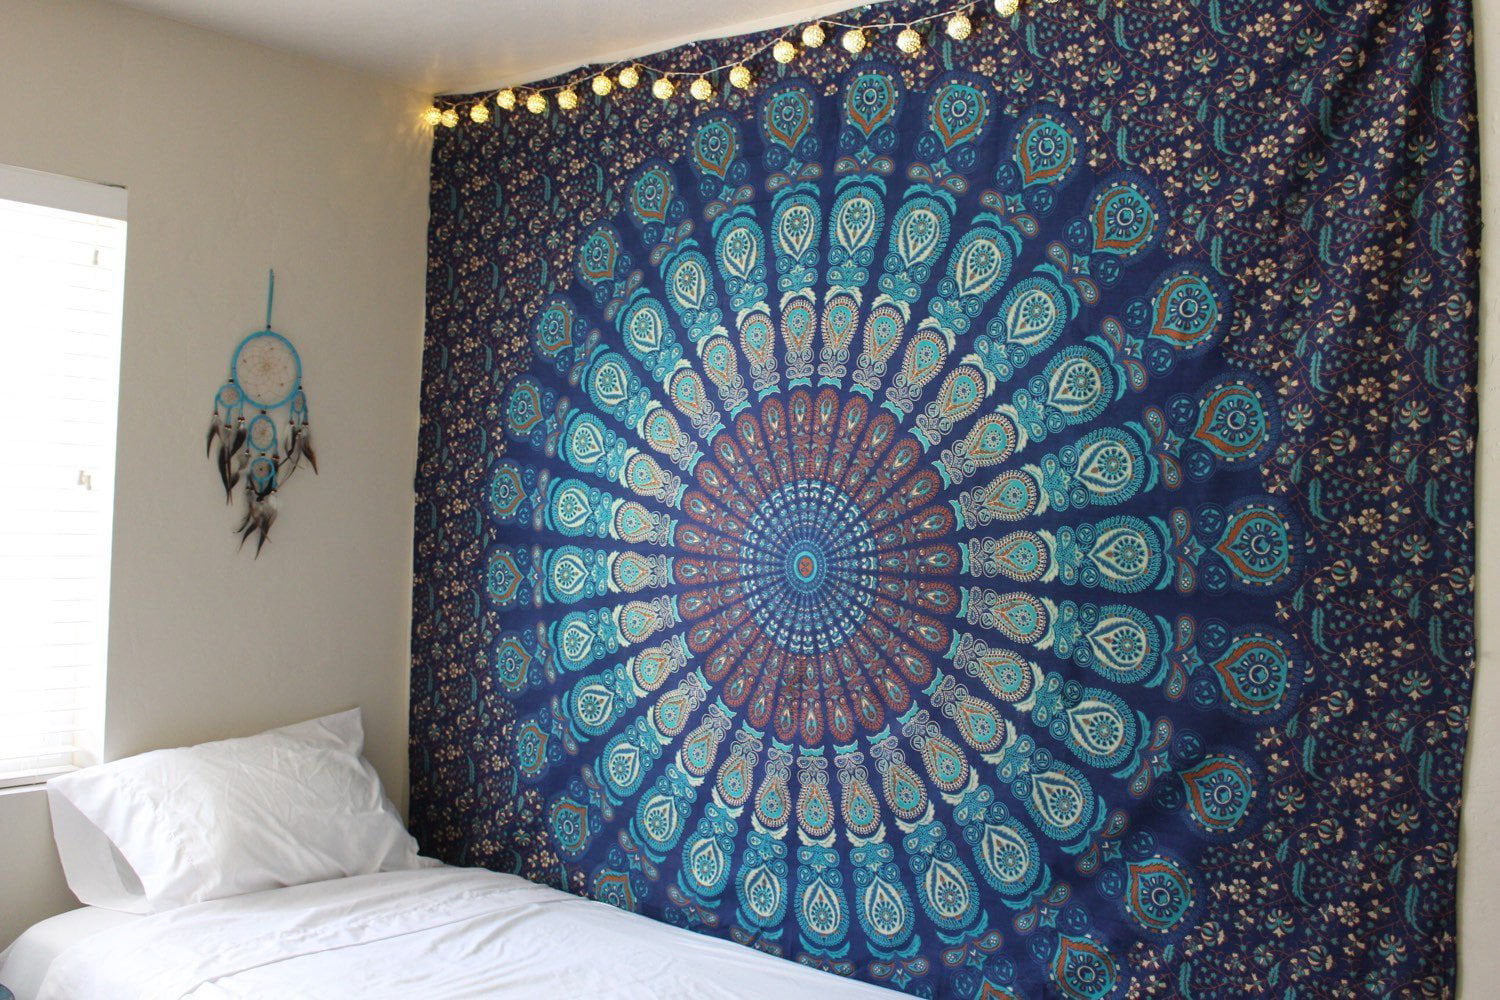 Fashion Mandala Tapestry Wall Hanging Hippie Bedspread Blanket Home Dorm Decor 